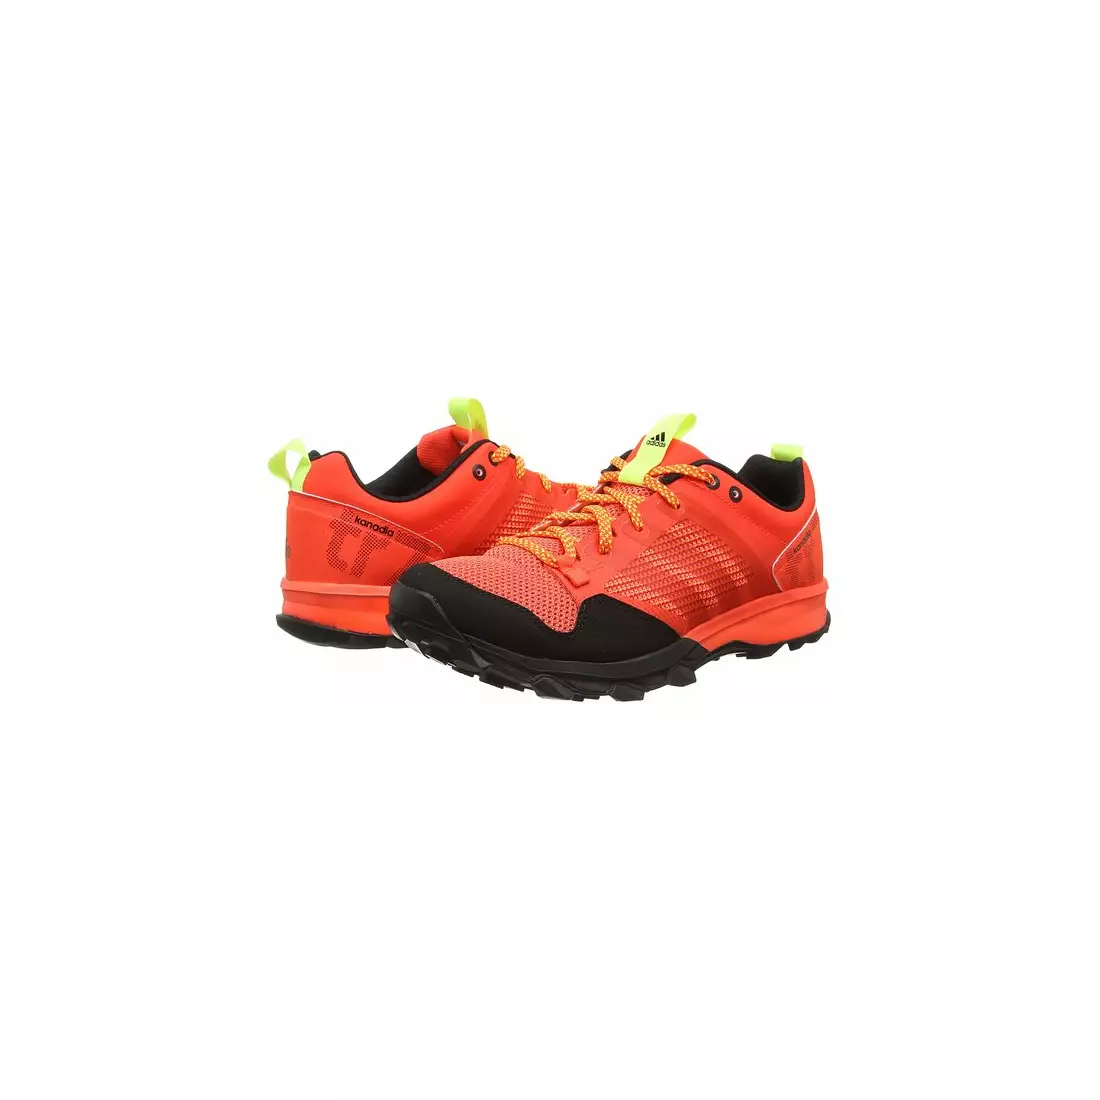 Pánské běžecké boty ADIDAS Kanadia 7 tr m B33625